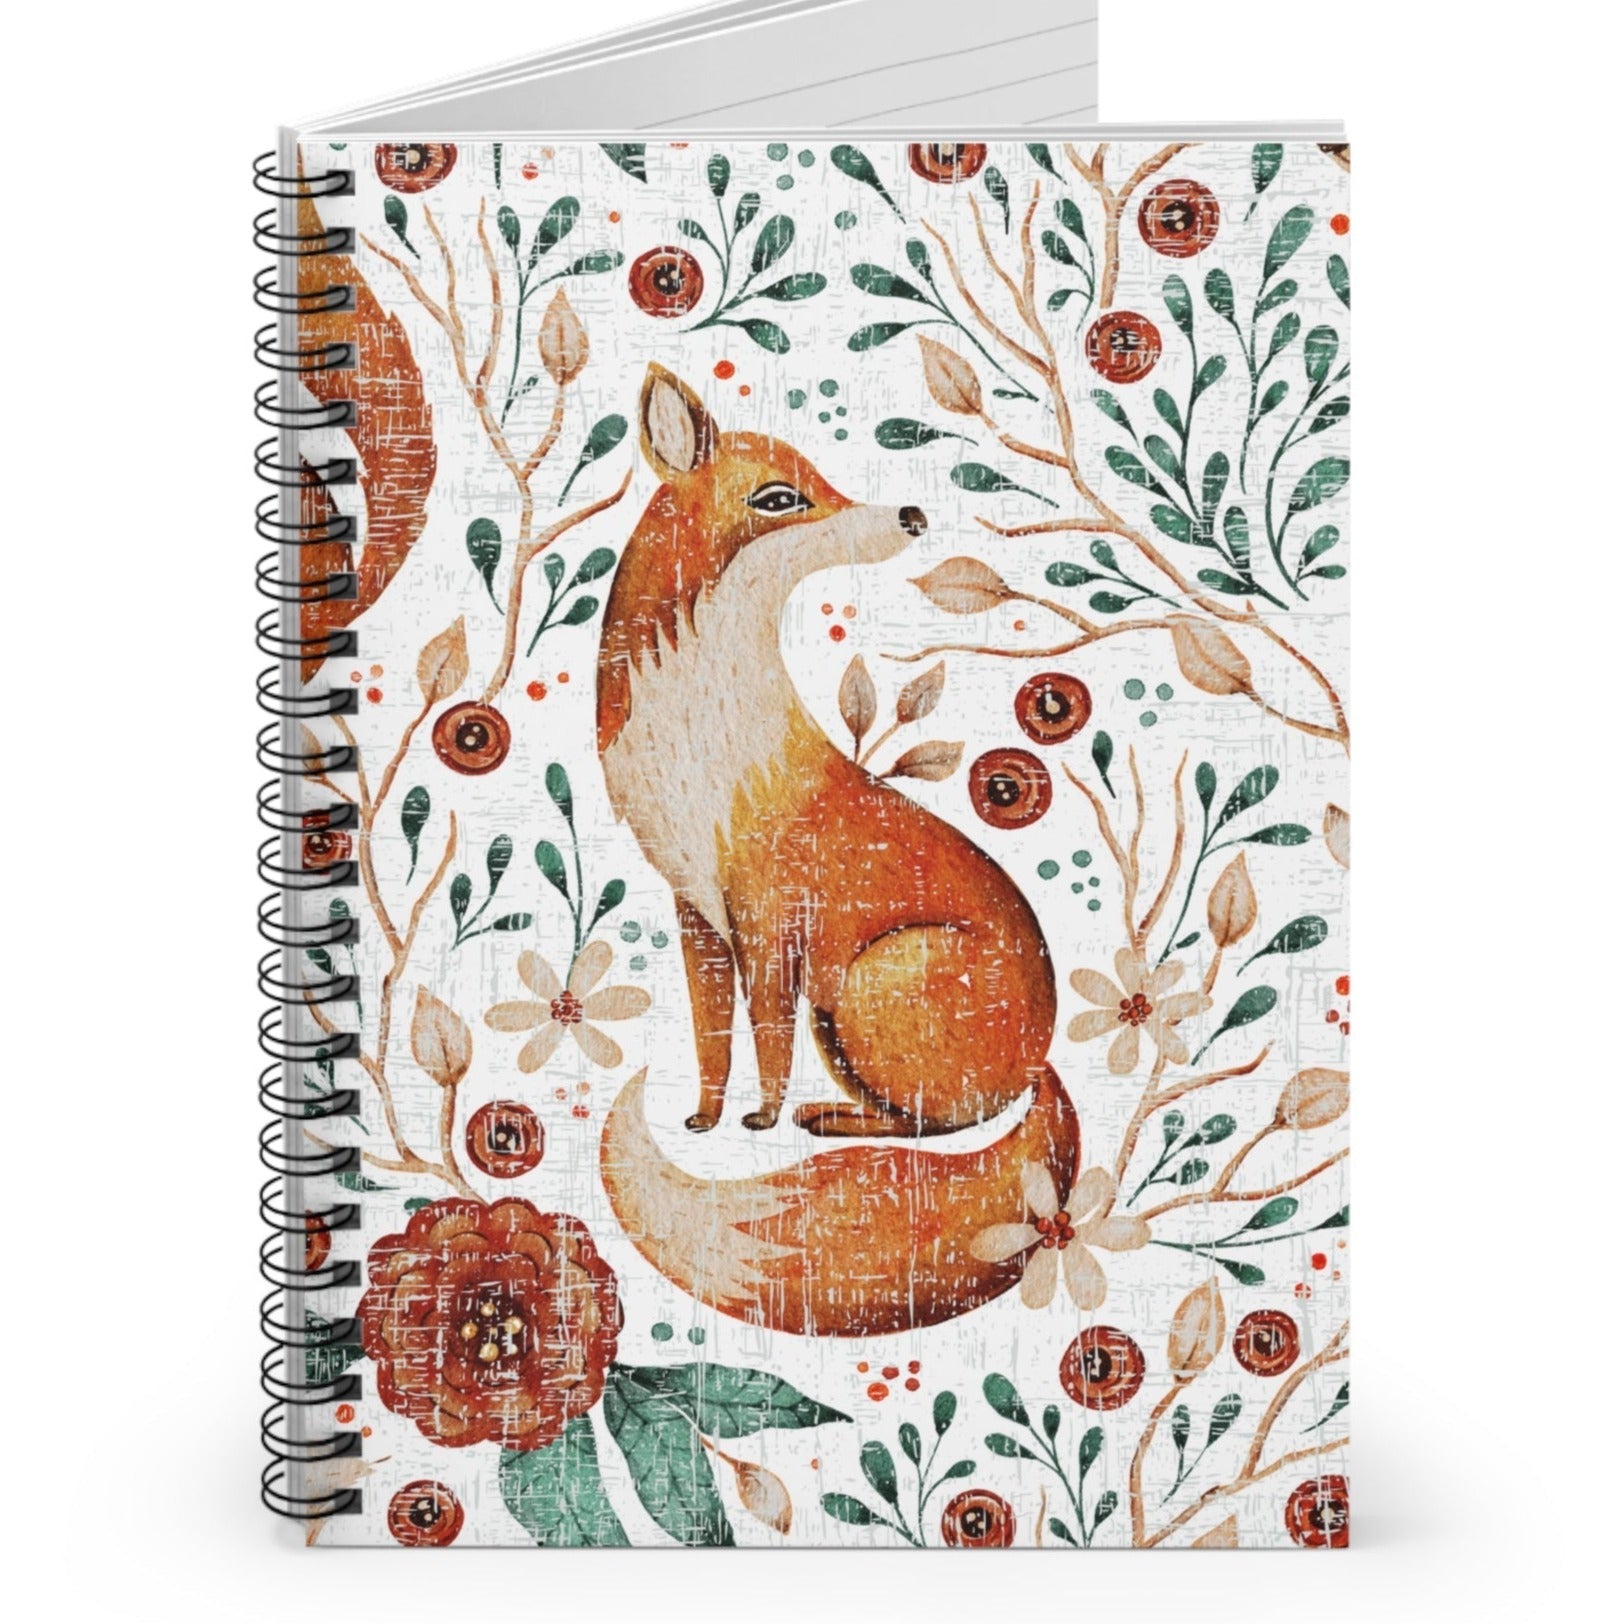 Fall Fox on White Botanical Background Spiral Notebook - Ruled Line: Autumn Wildlife Design - Eddy and Rita